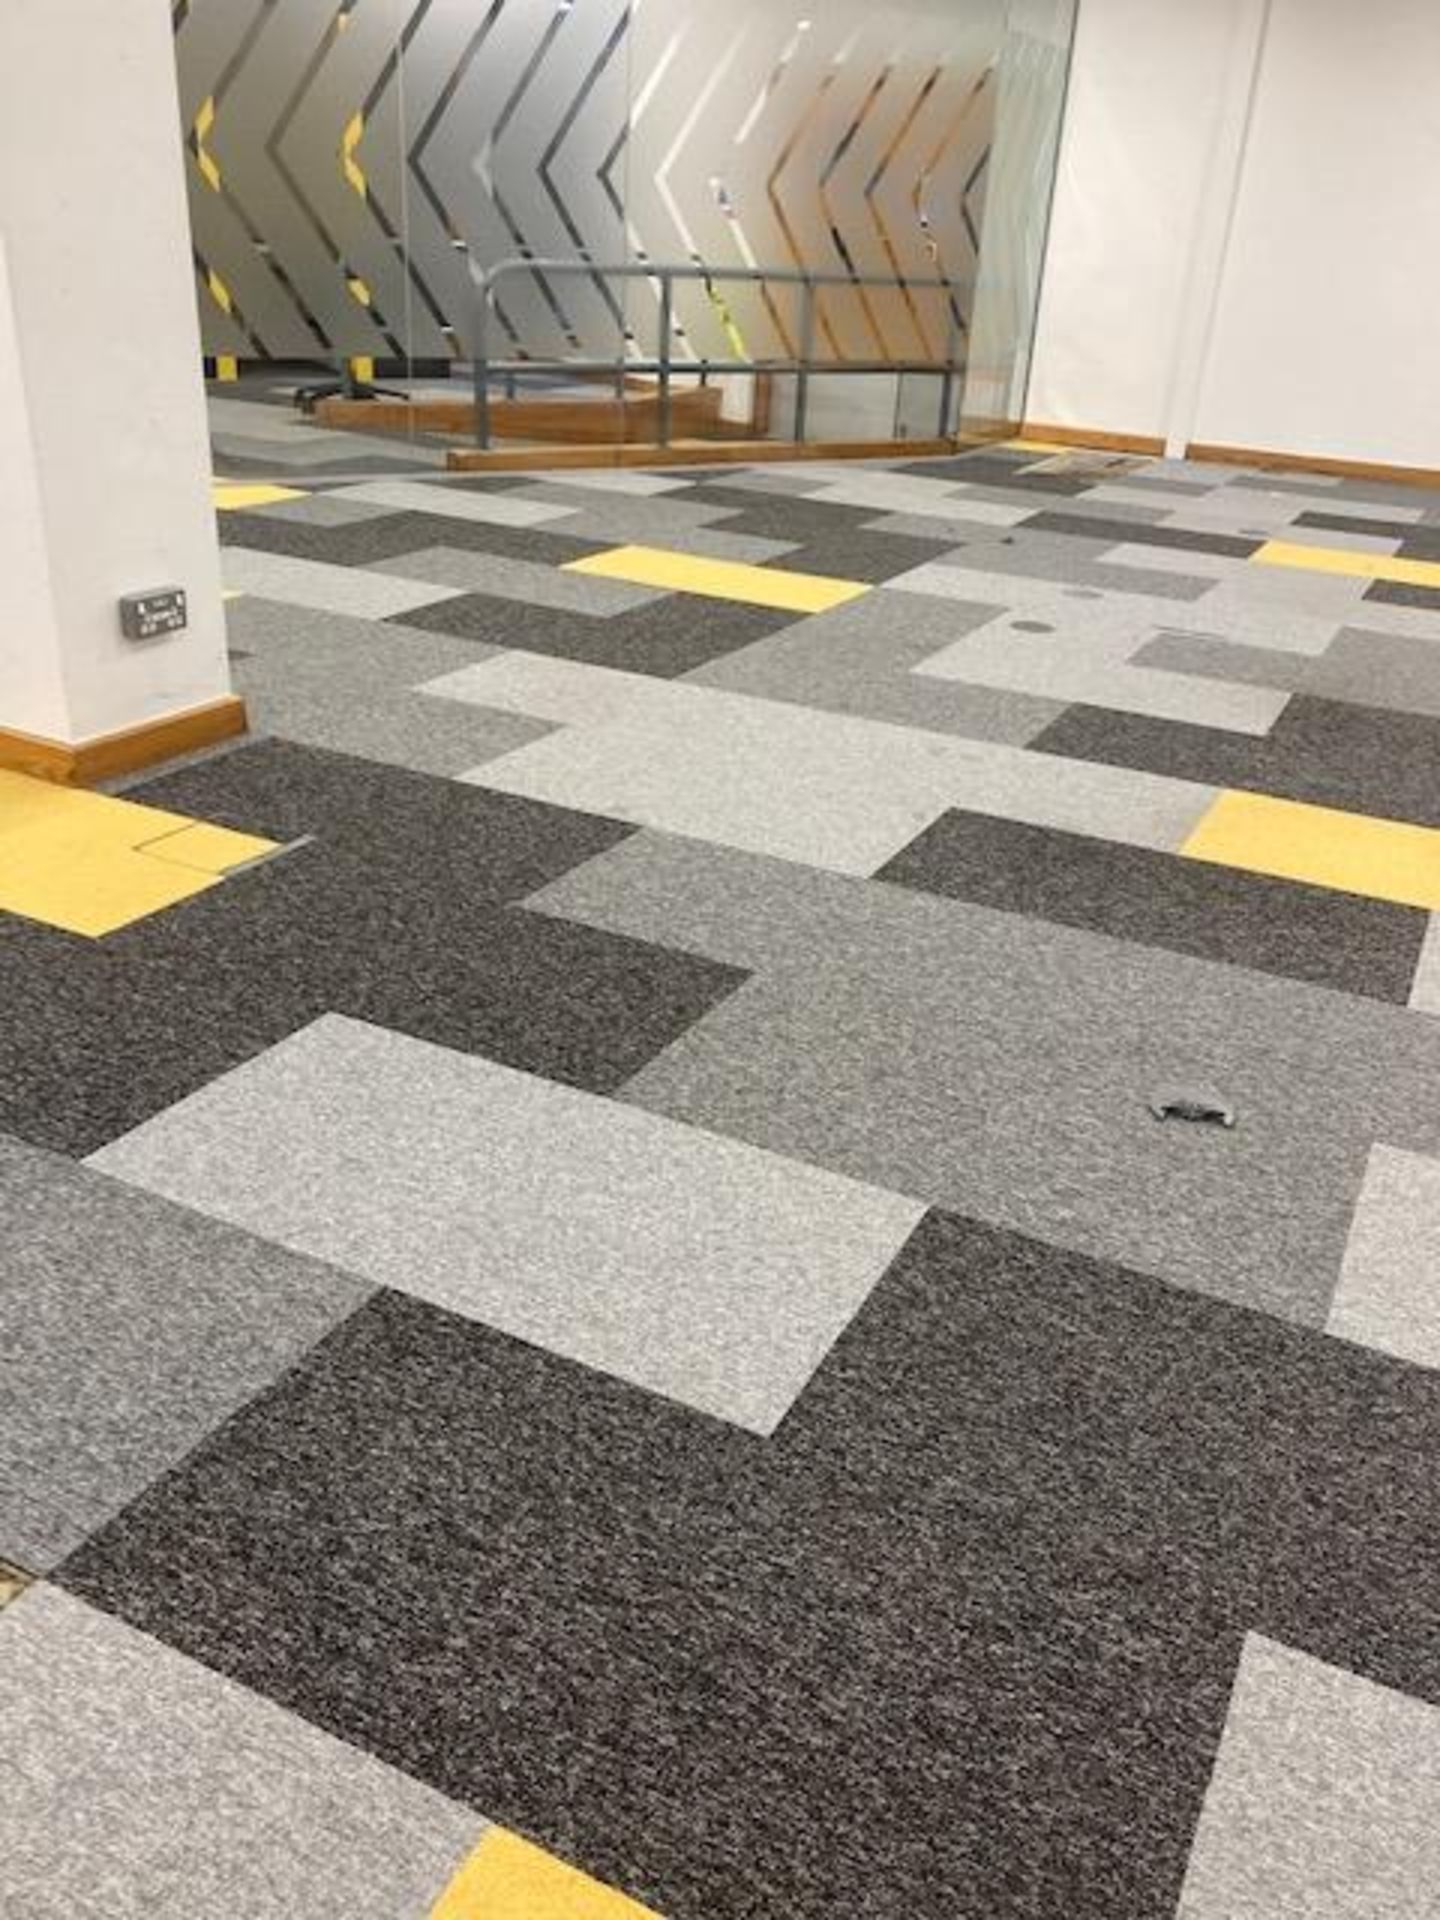 Raised access Flooring